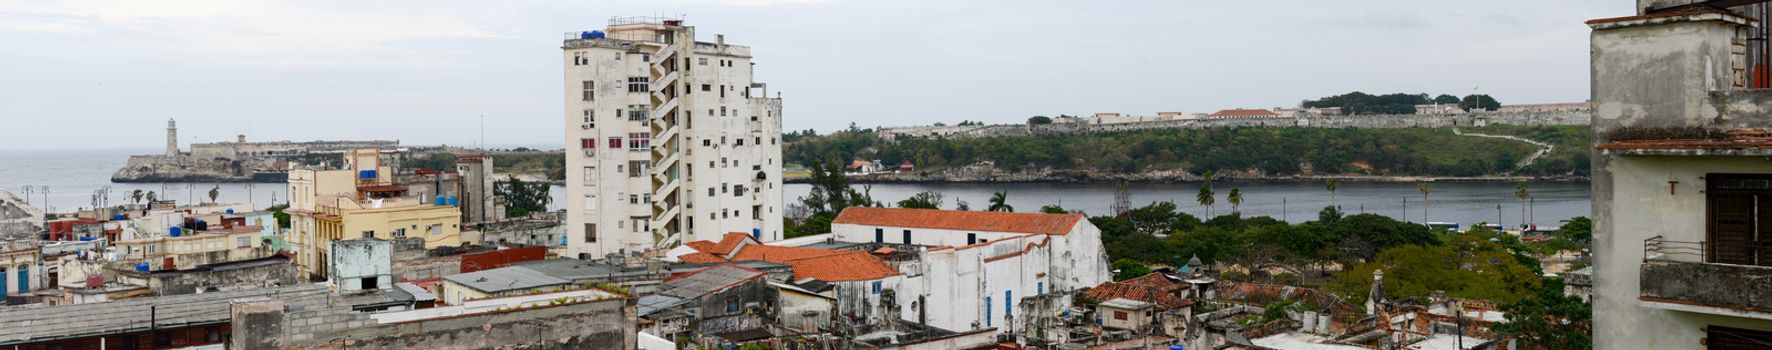 Havana, Cuba - 26 January 2016: Panoramic view at the neighborhood of Habana Vieja in Havana on Cuba